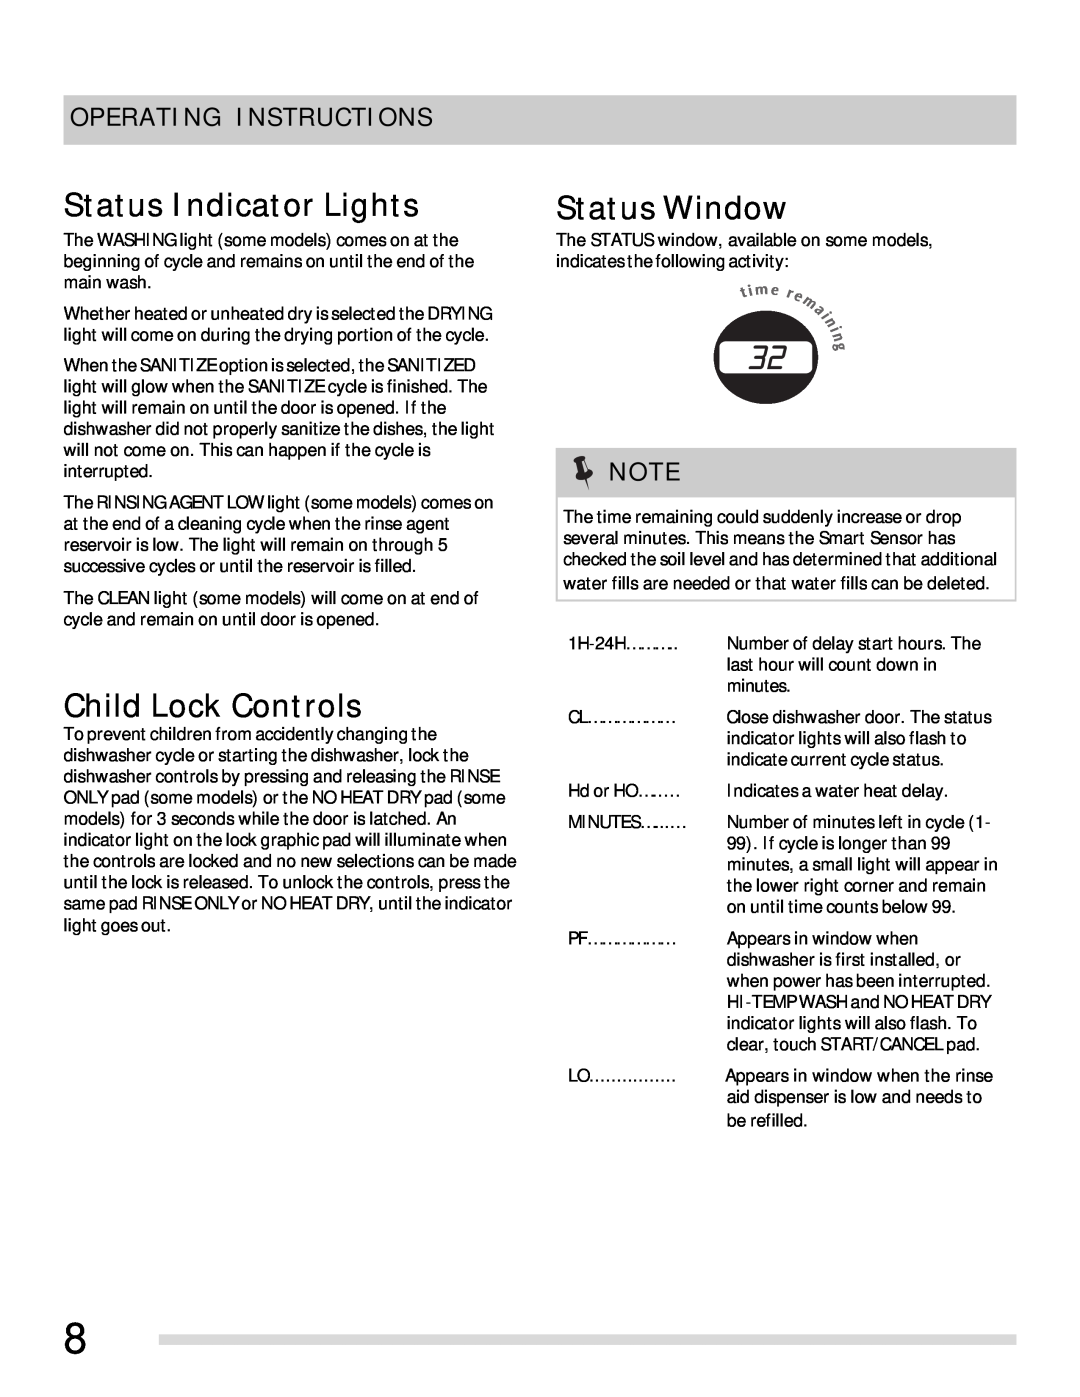 Frigidaire FGBD2431KF, FGBD2431KW Status Indicator Lights, Child Lock Controls, Status Window, Operating Instructions 